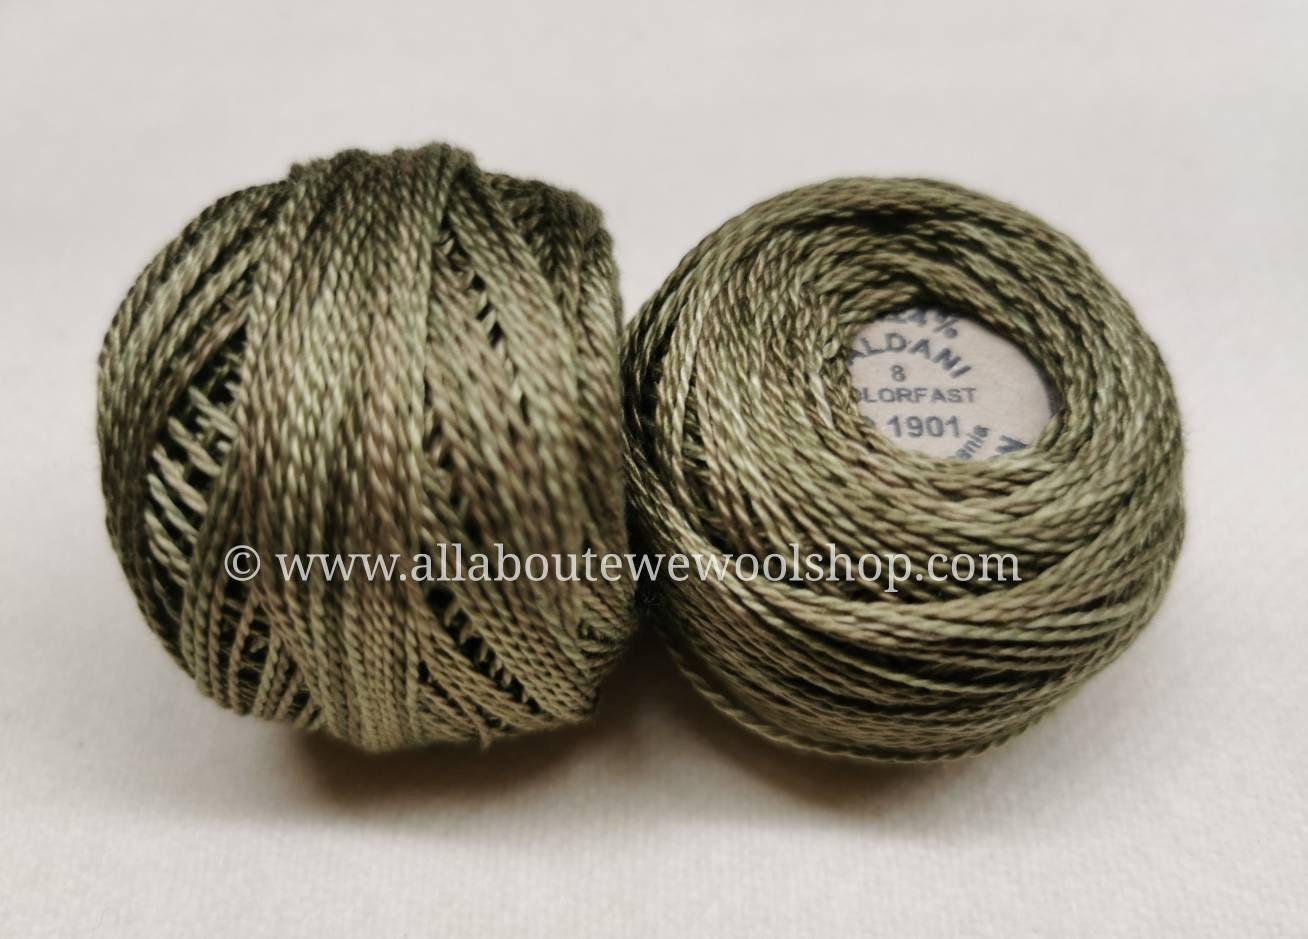 O1901 #8 Valdani Pearl/Perle Cotton Thread - All About Ewe Wool Shop